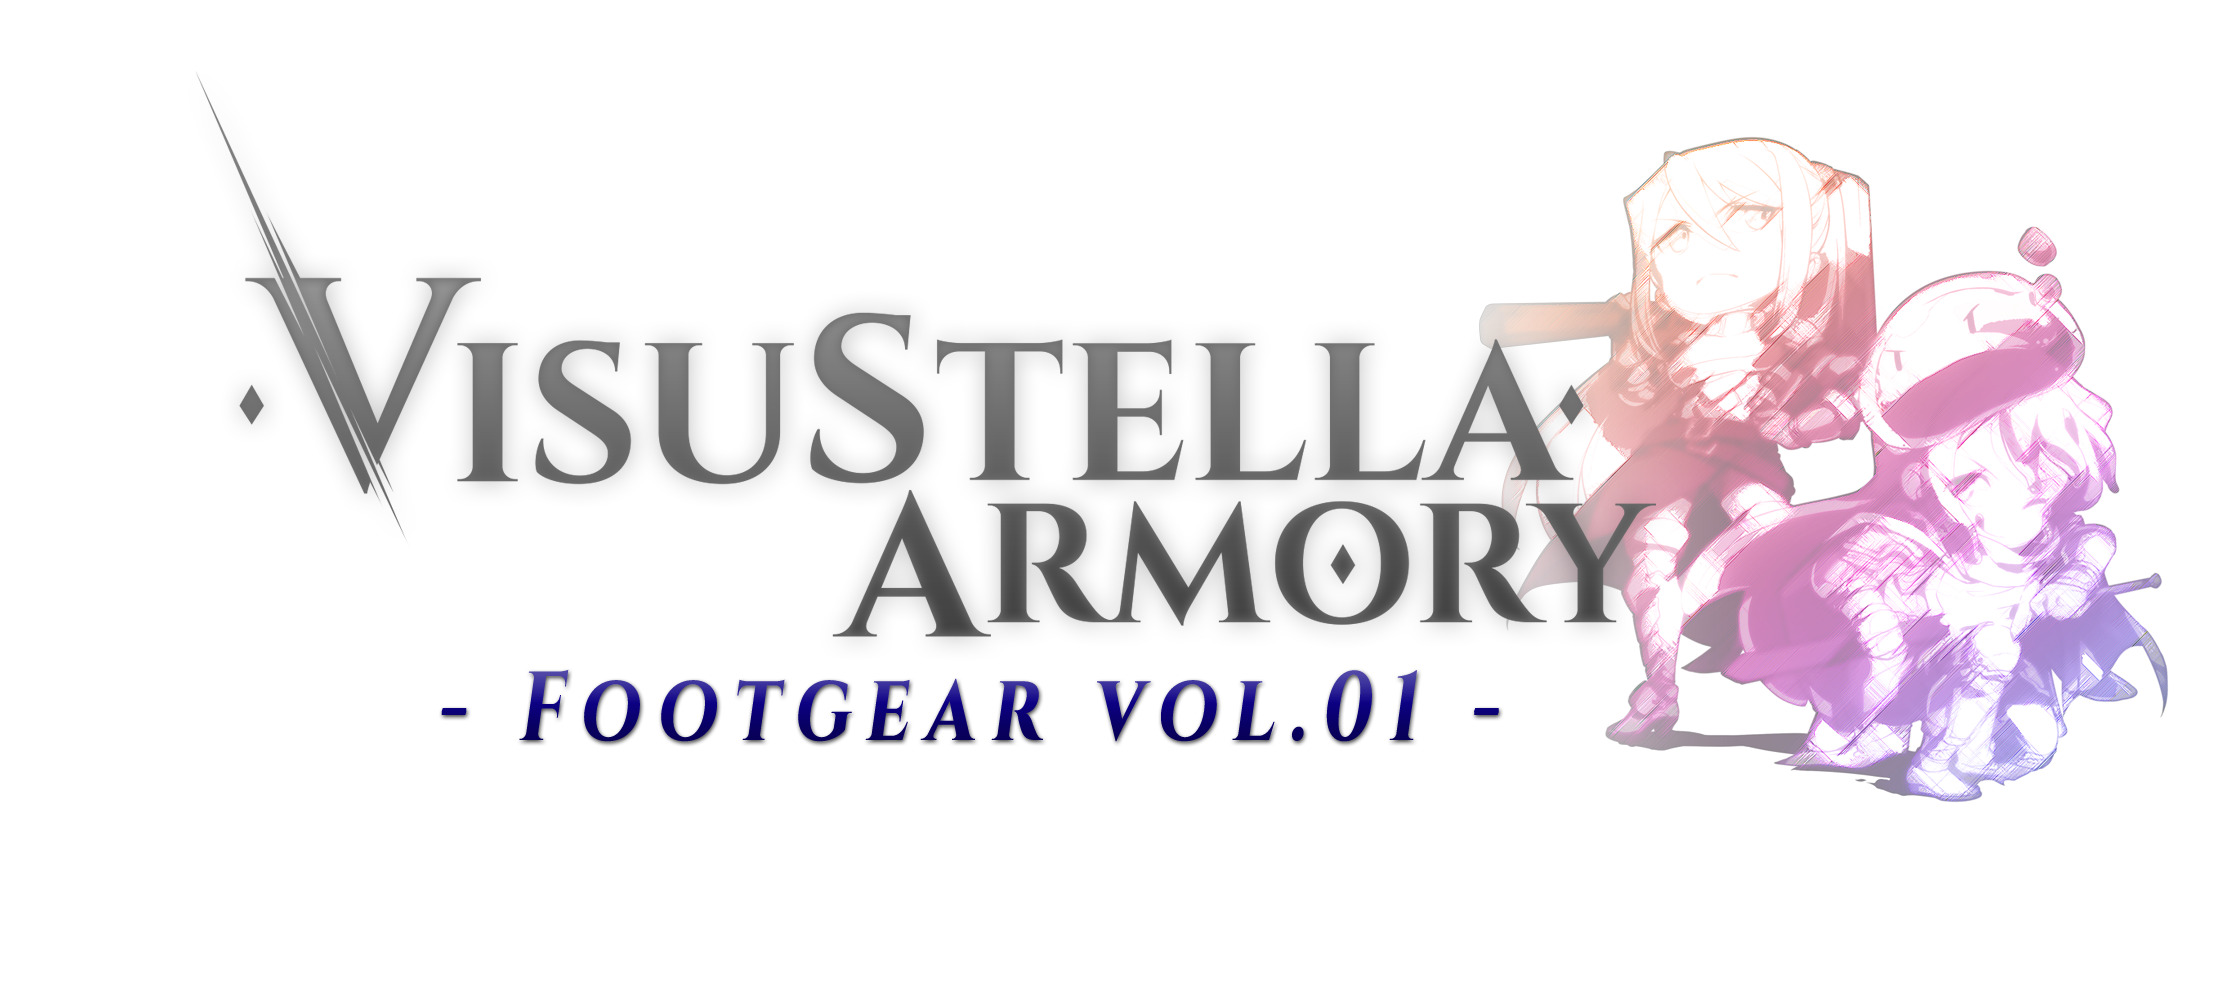 VisuStella Armory: Footgear Vol.01